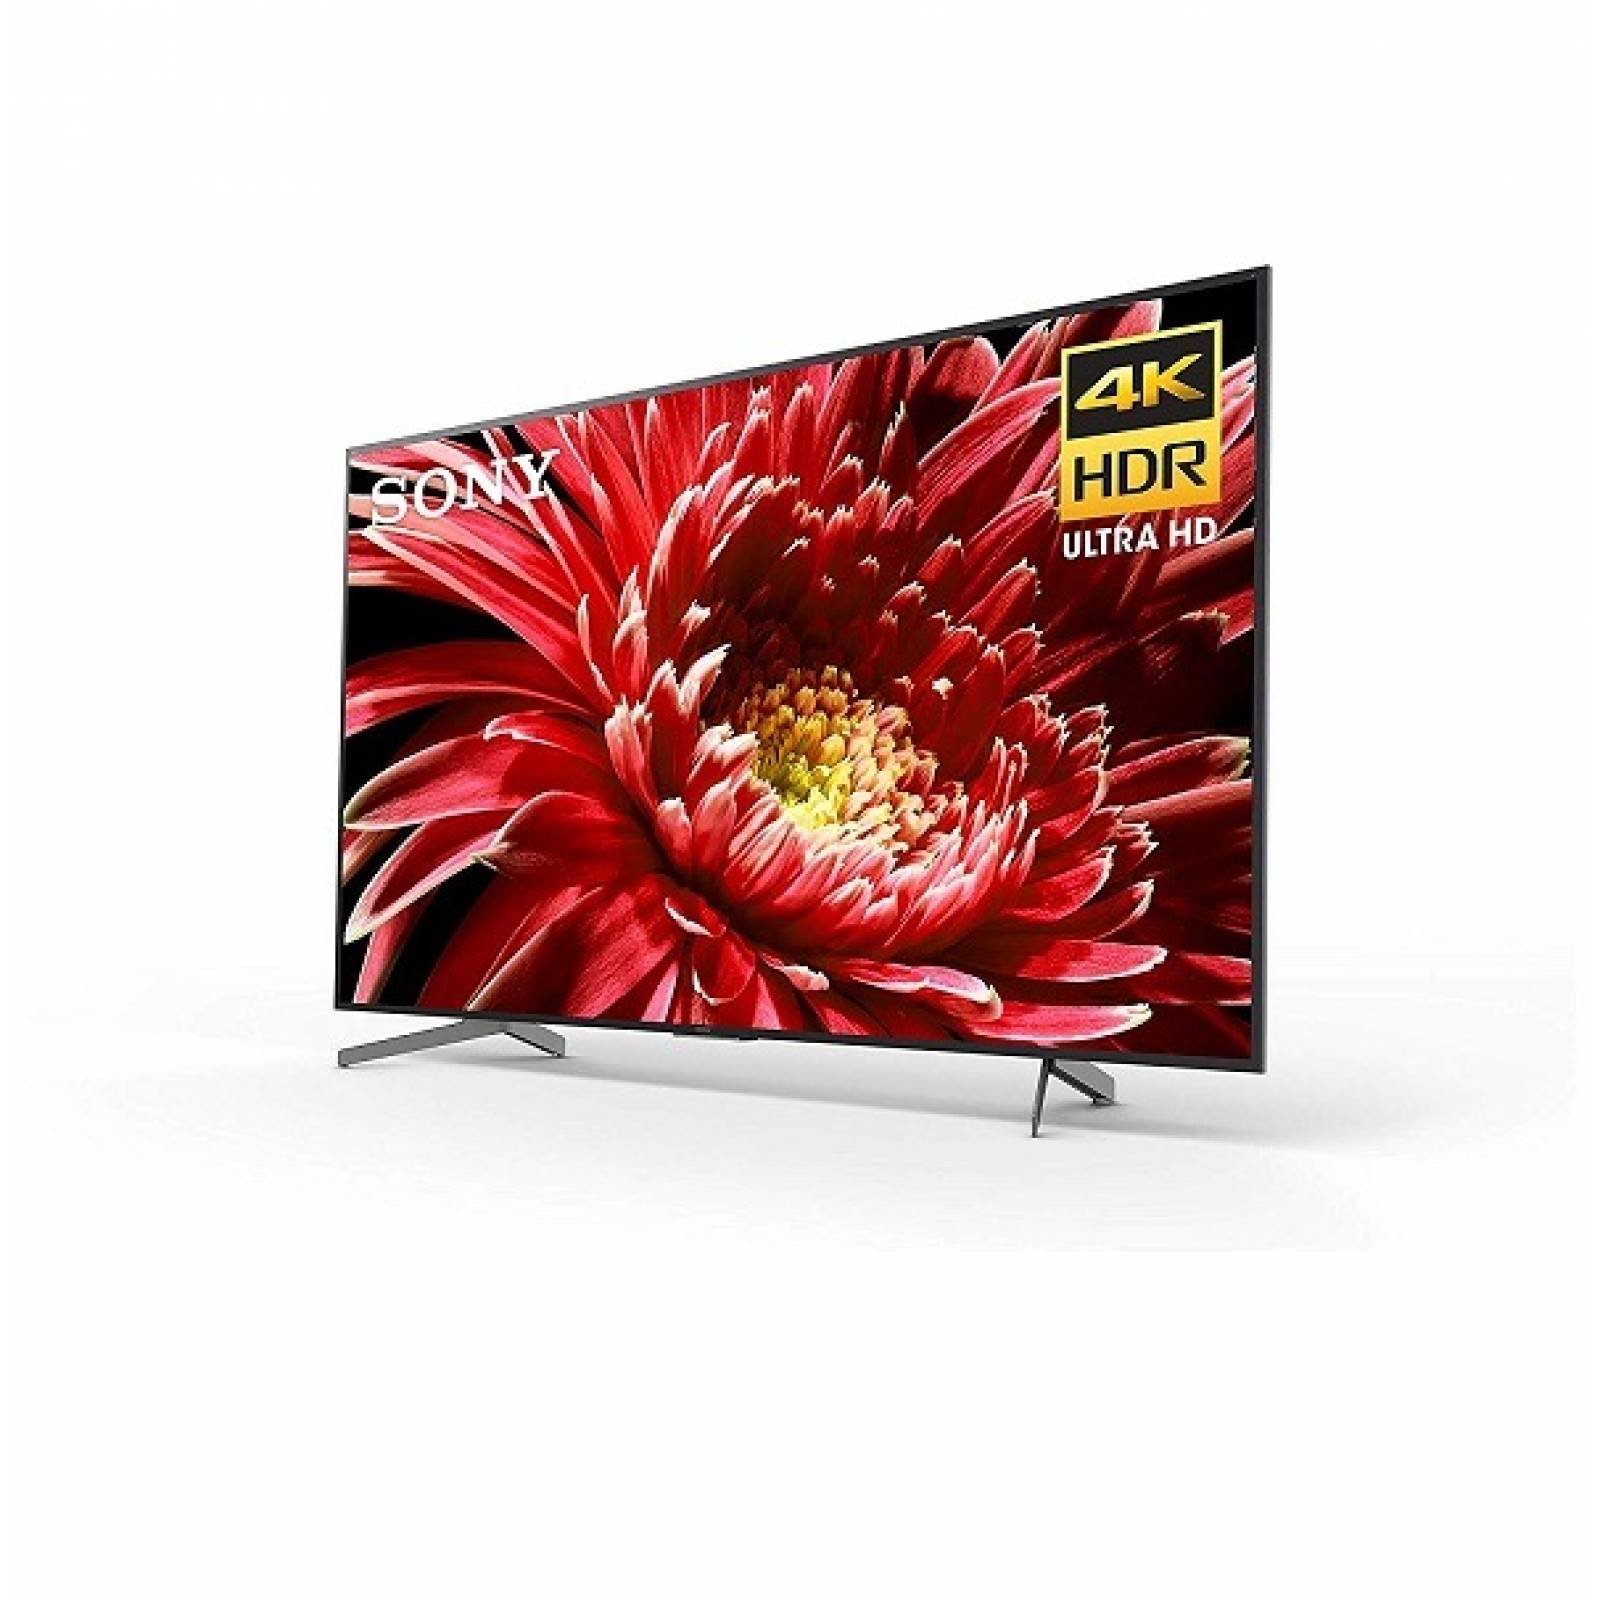 Smart TV 85 Sony 4k UHD TRILUMINOS Clear audio XBR-85X850G